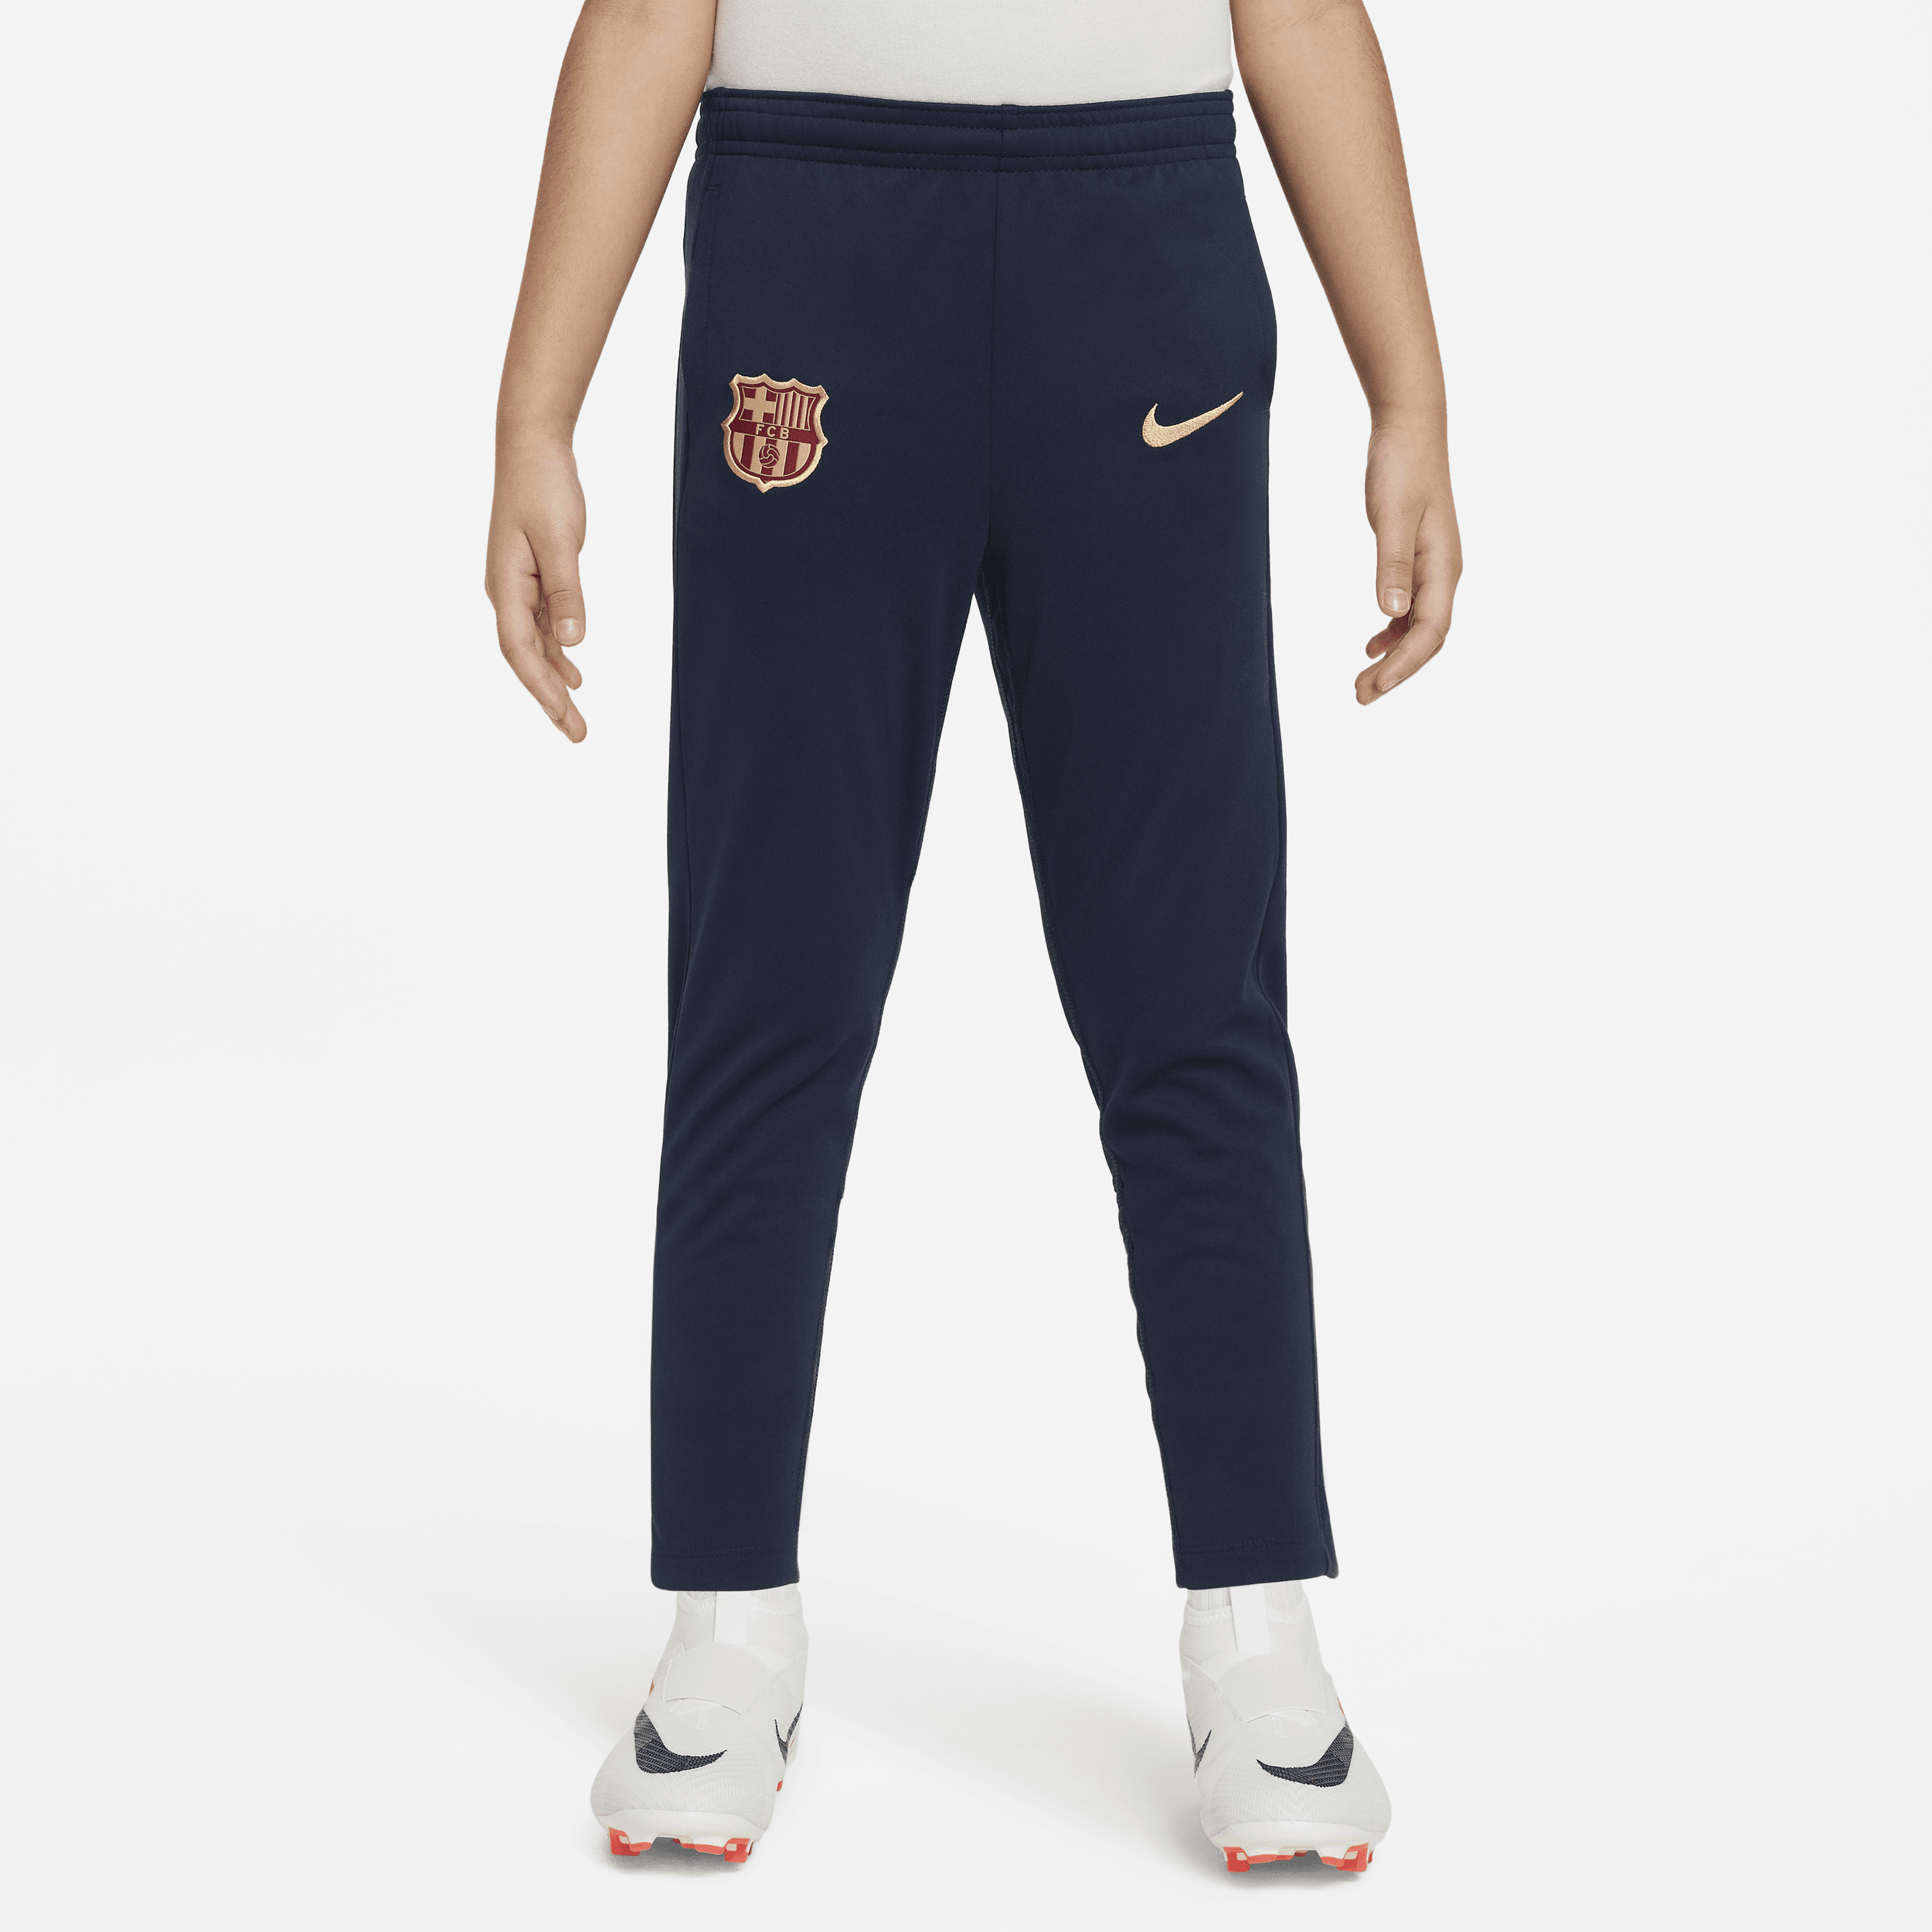 Pantaloni in maglia Nike Football FC Barcelona Academy Pro – Bambino/a - Blu